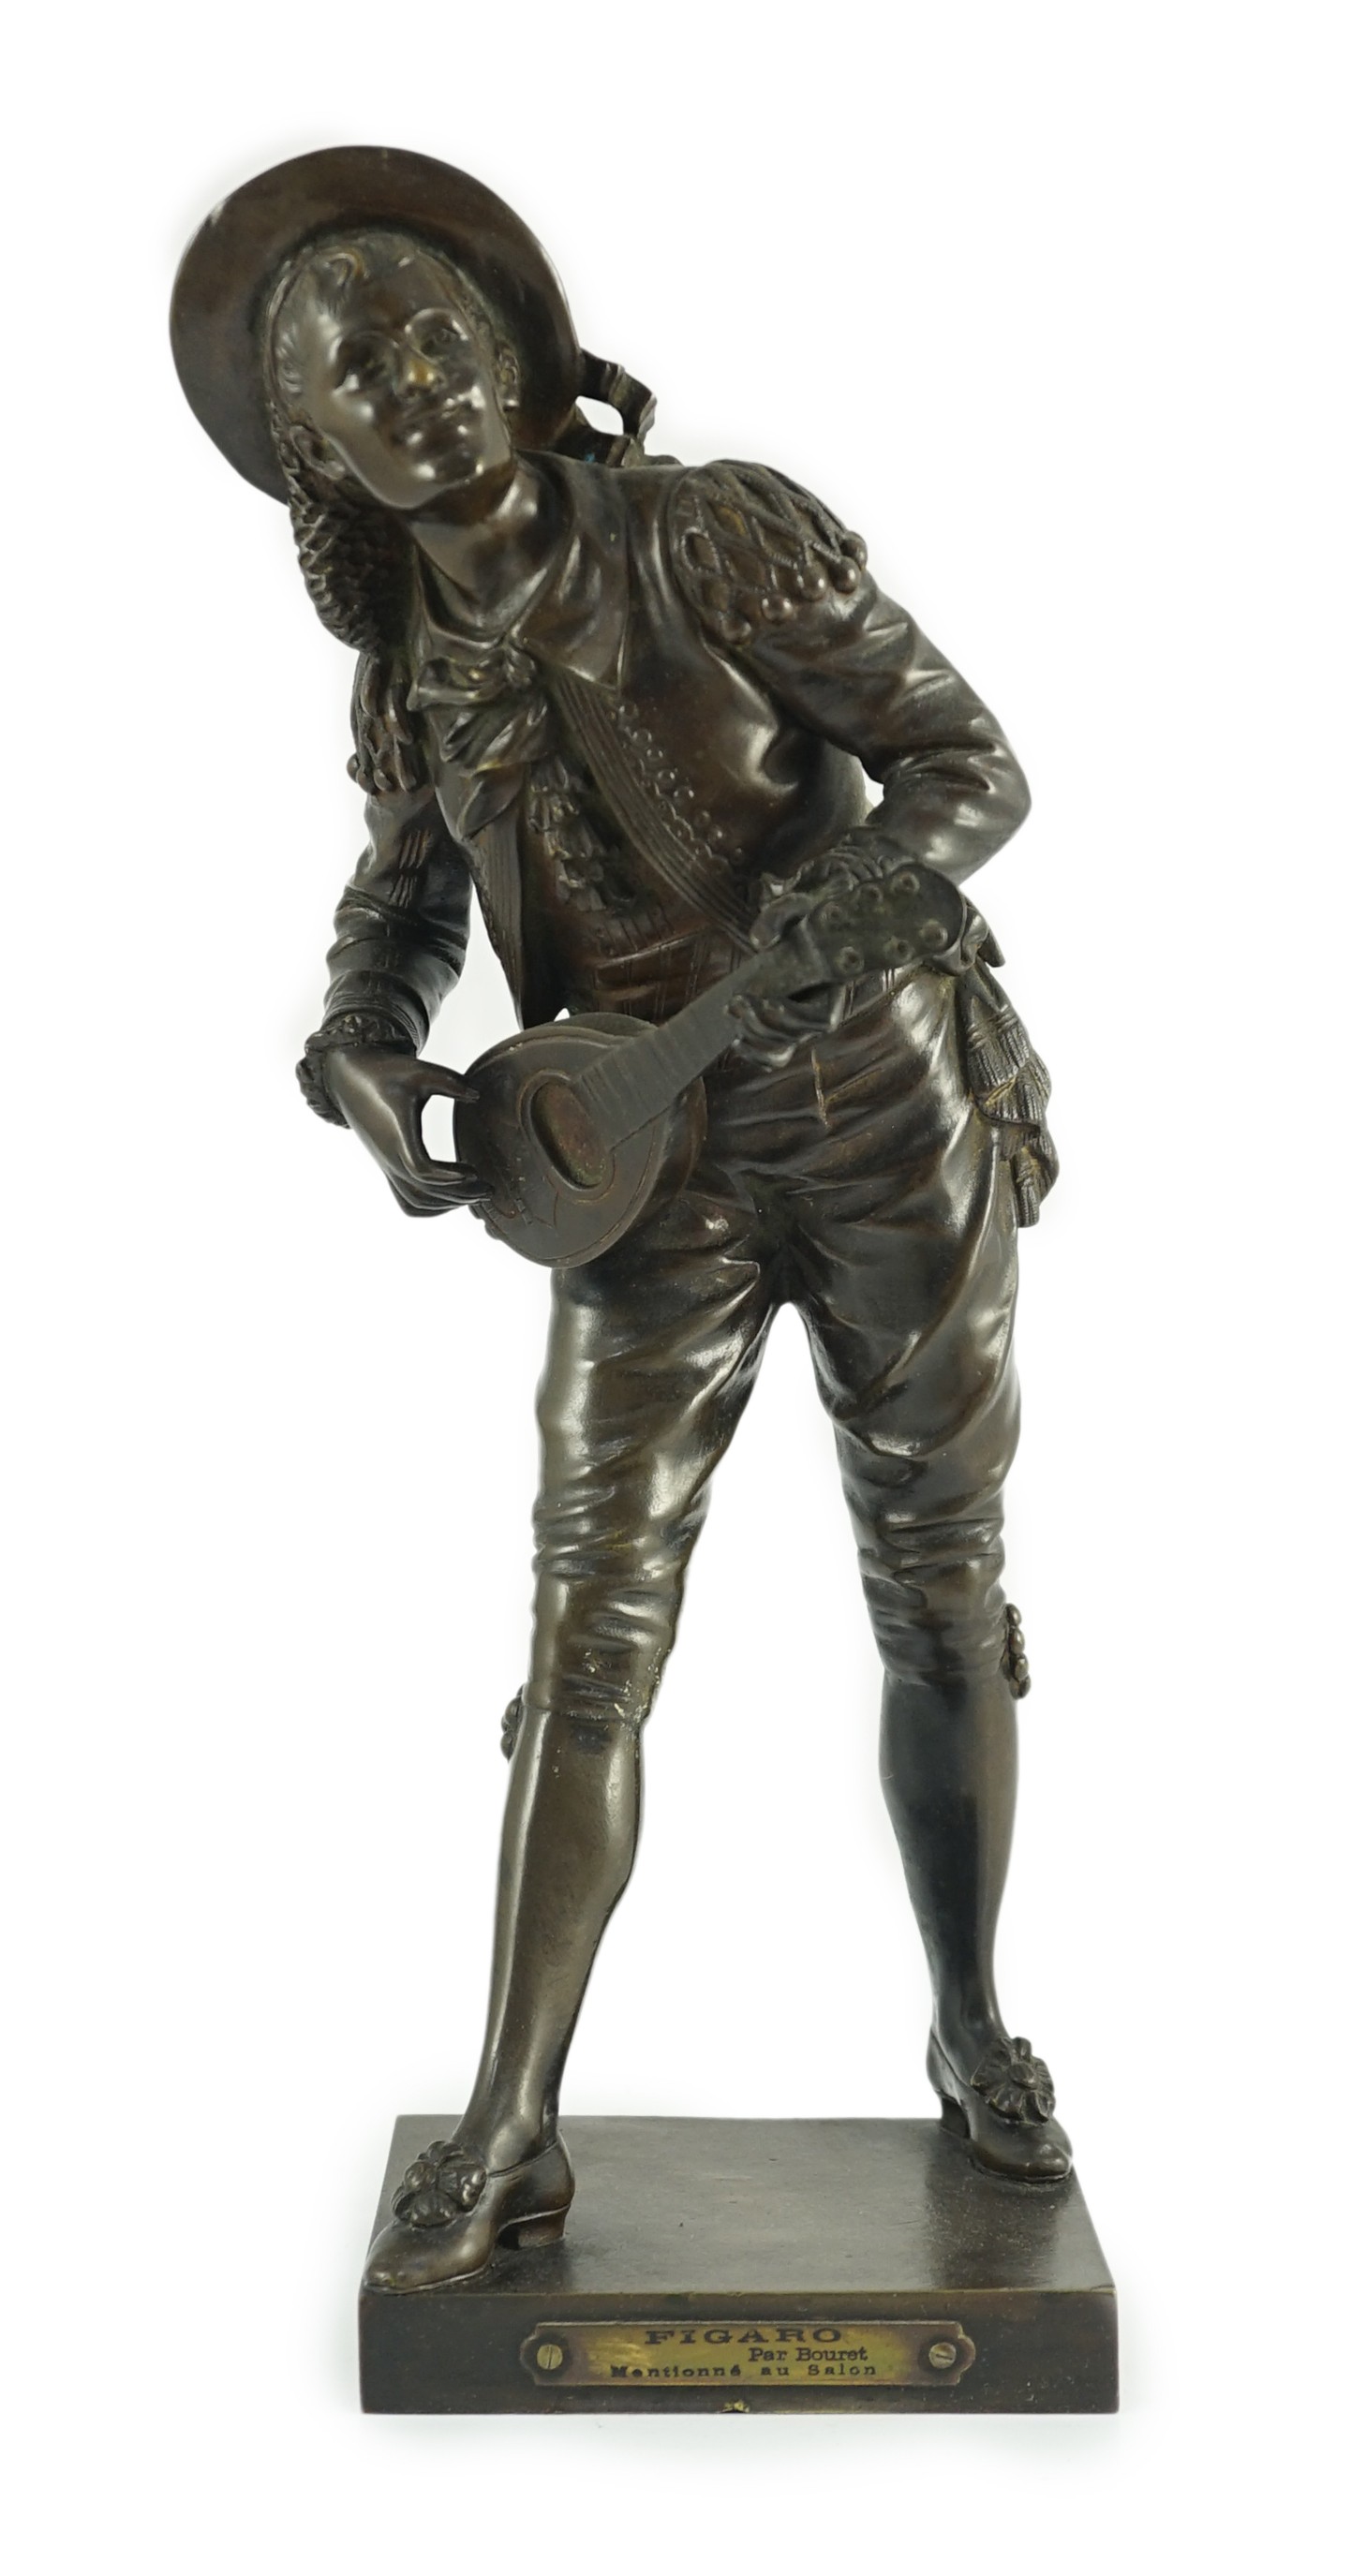 Eutrope Bouret (French, 1833-1906). A bronze figure of 'Figaro', 36cm high                                                                                                                                                  